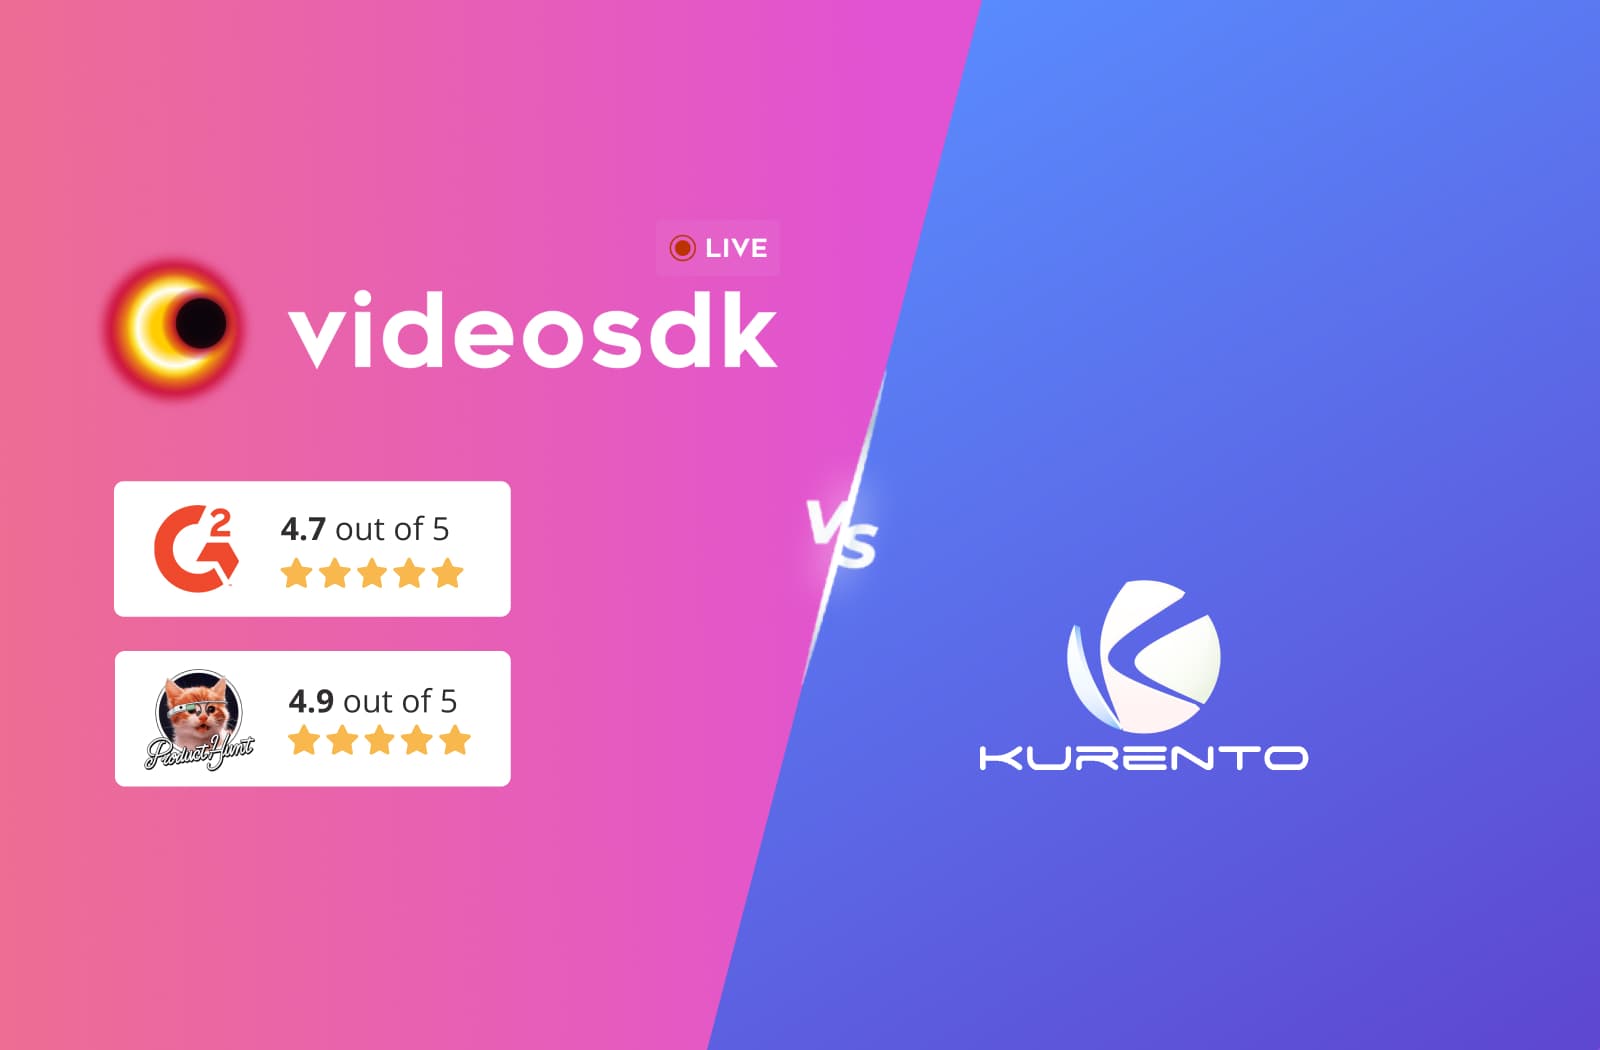 Kurento vs Videosdk